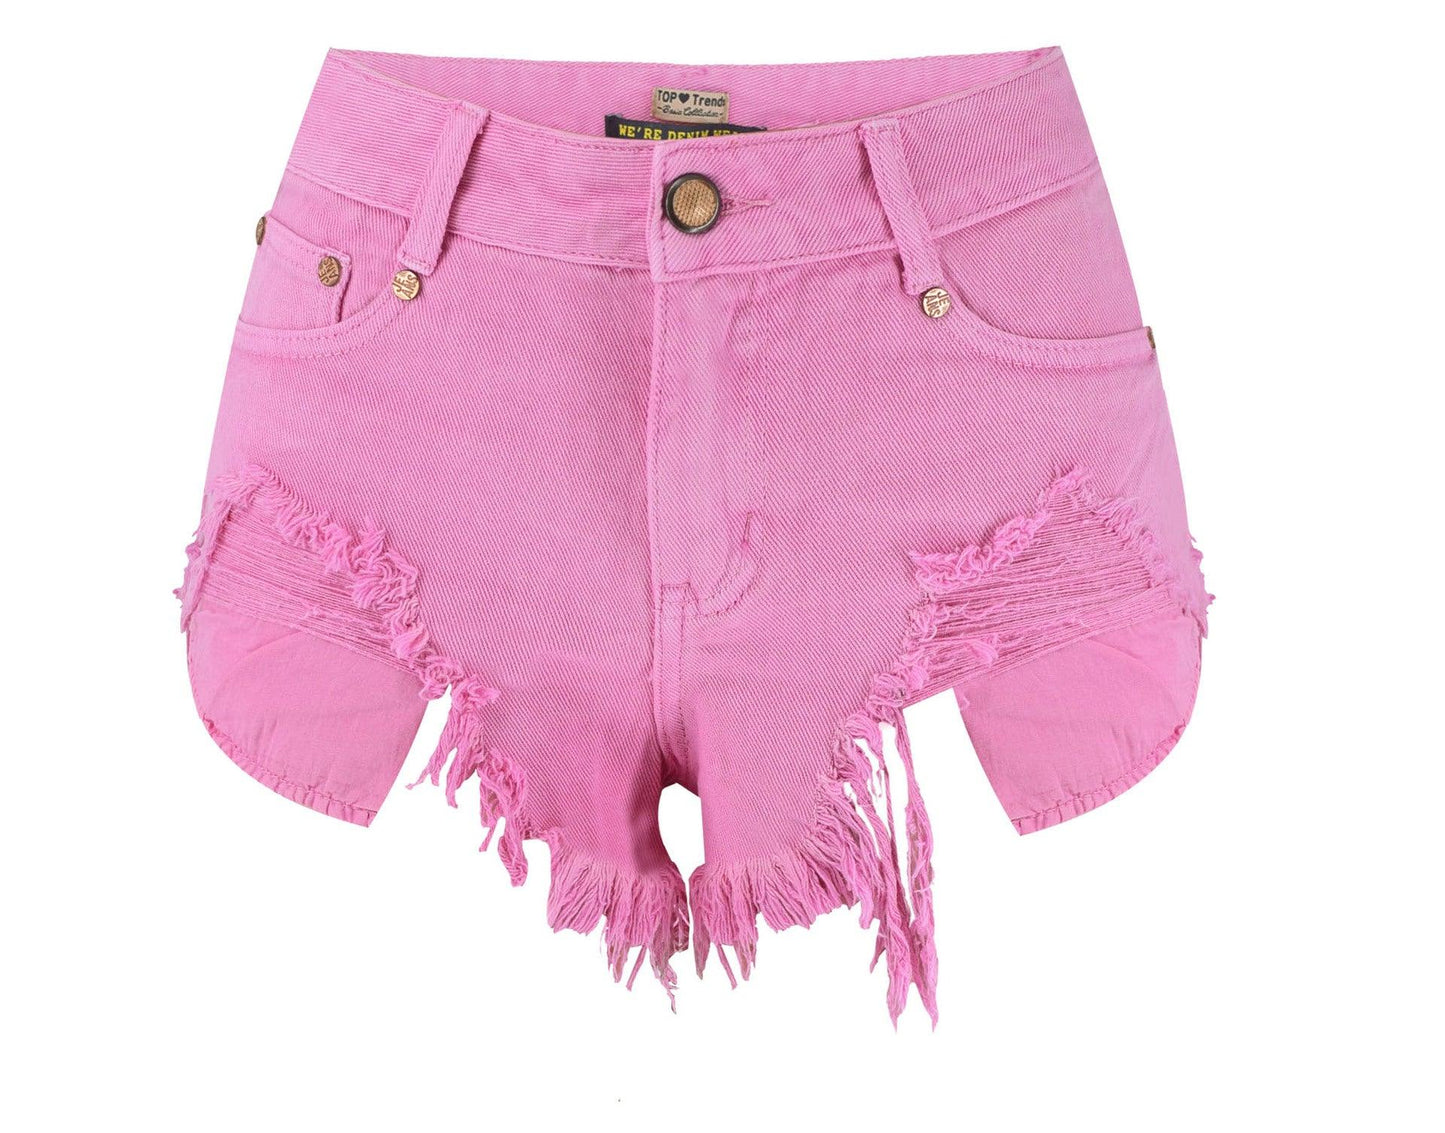 Stylish High Waist Slim-Fit Pink Denim Shorts for Women - Casual & Sexy - ForVanity denim, shorts, women's clothing Shorts